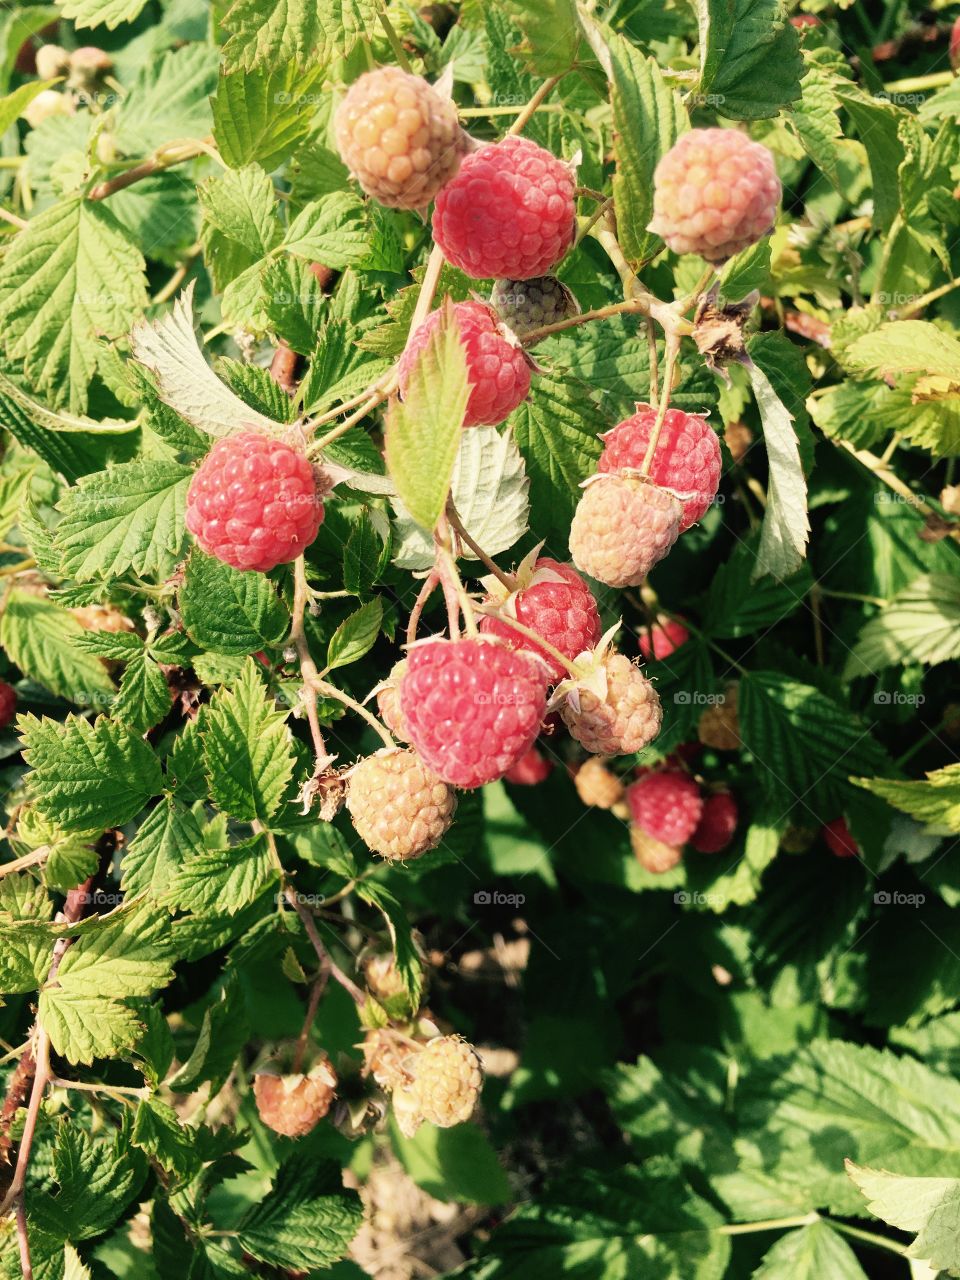 First Raspberries
